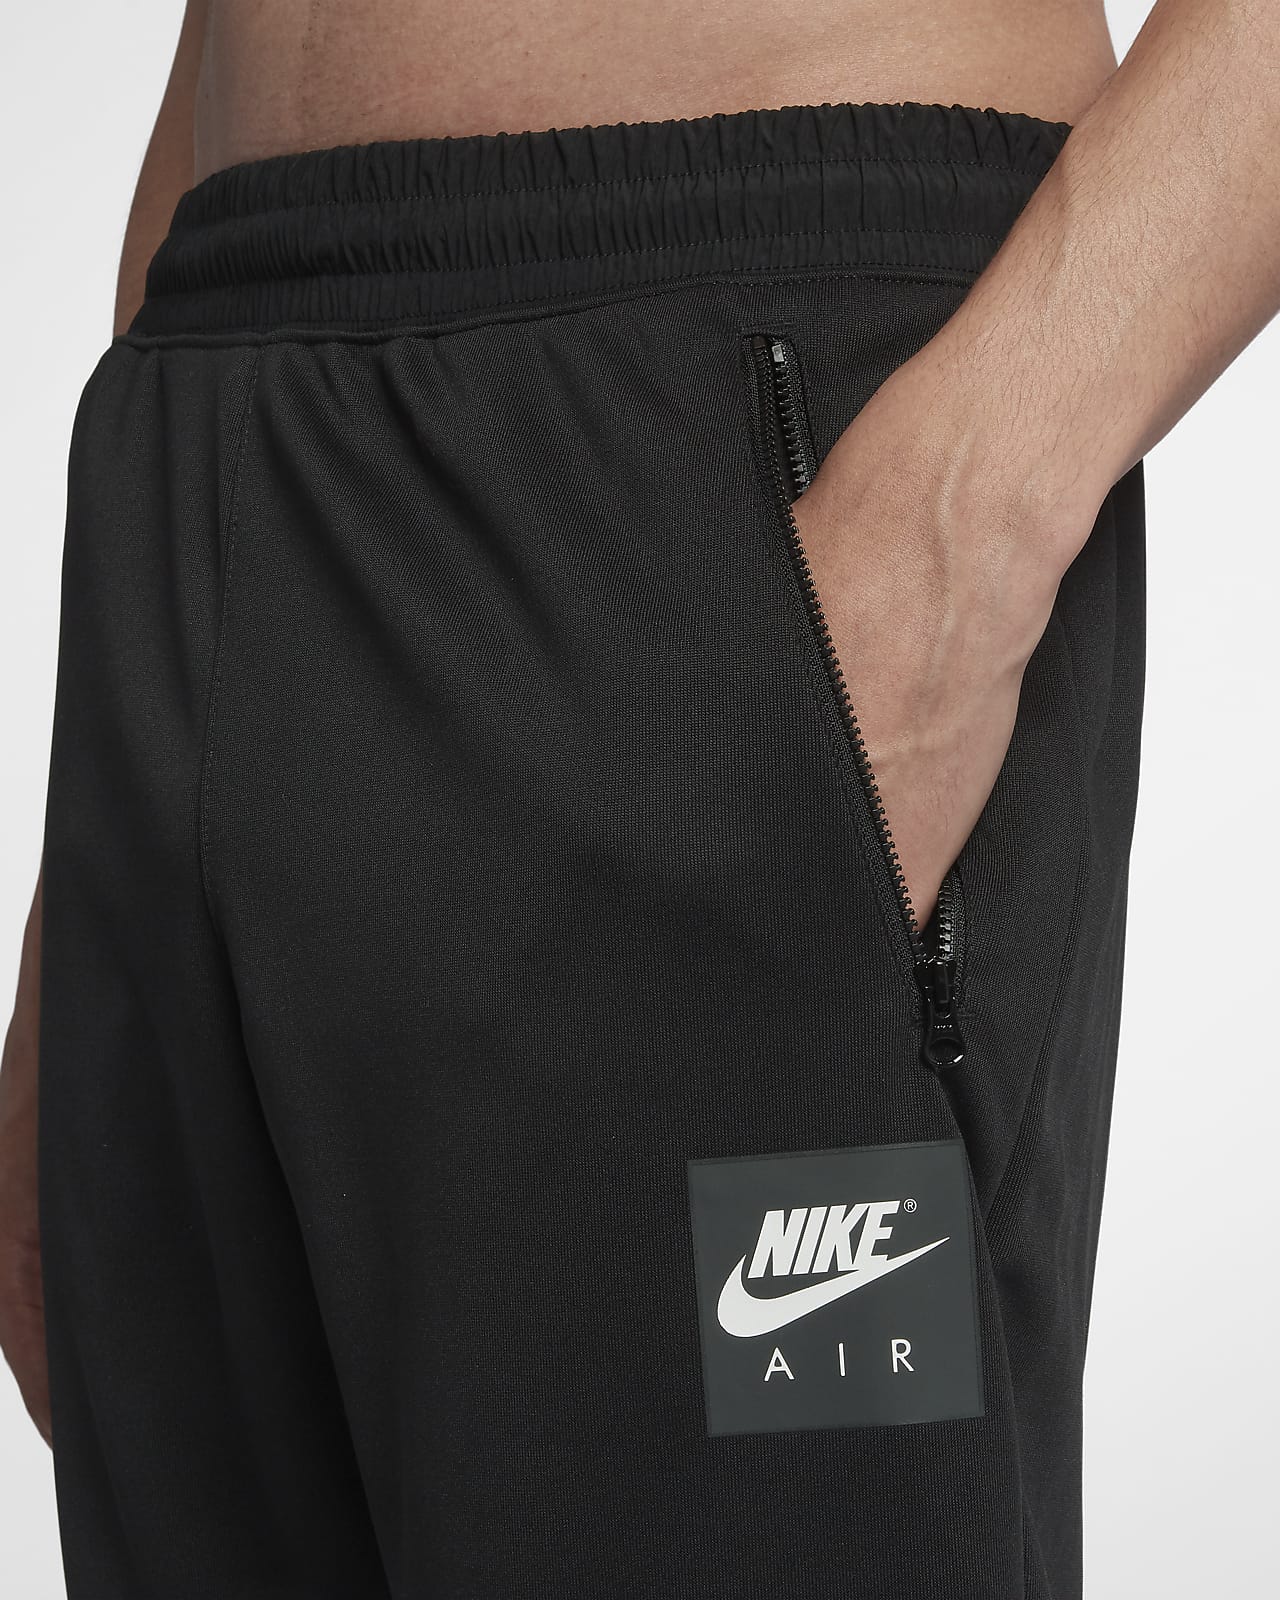 Nike Gym Classic Pants - Women's | Pants for women, Classic pants, Pants